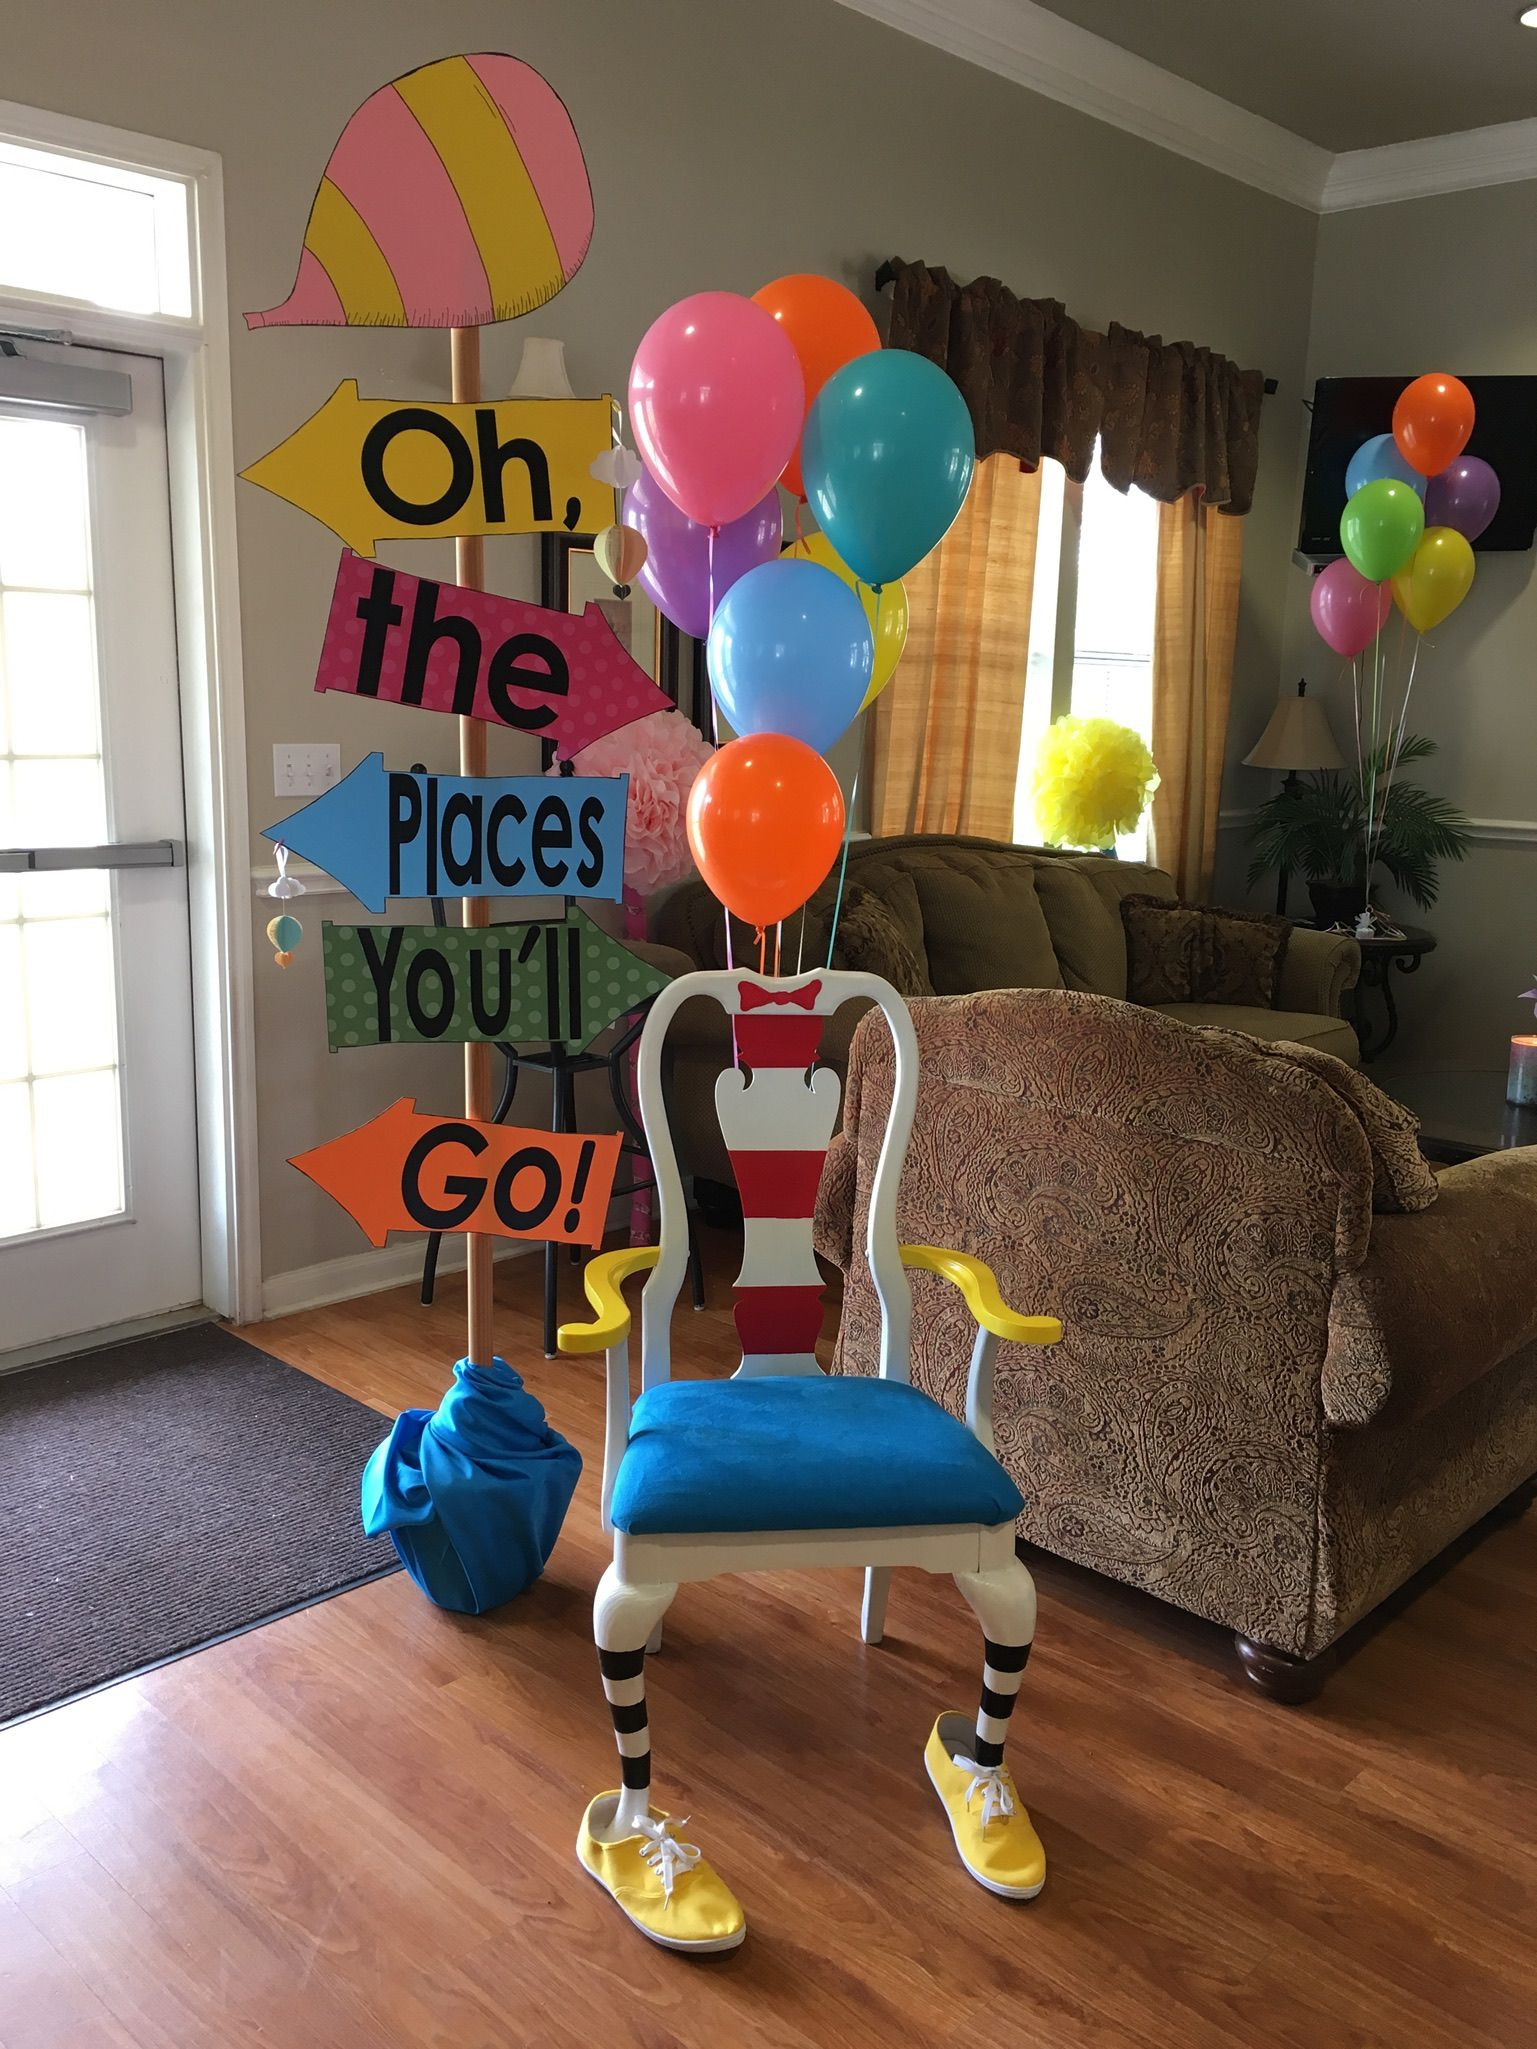 Dr Seuss Graduation Party Ideas
 Graduation party with "oh the places you ll go" theme